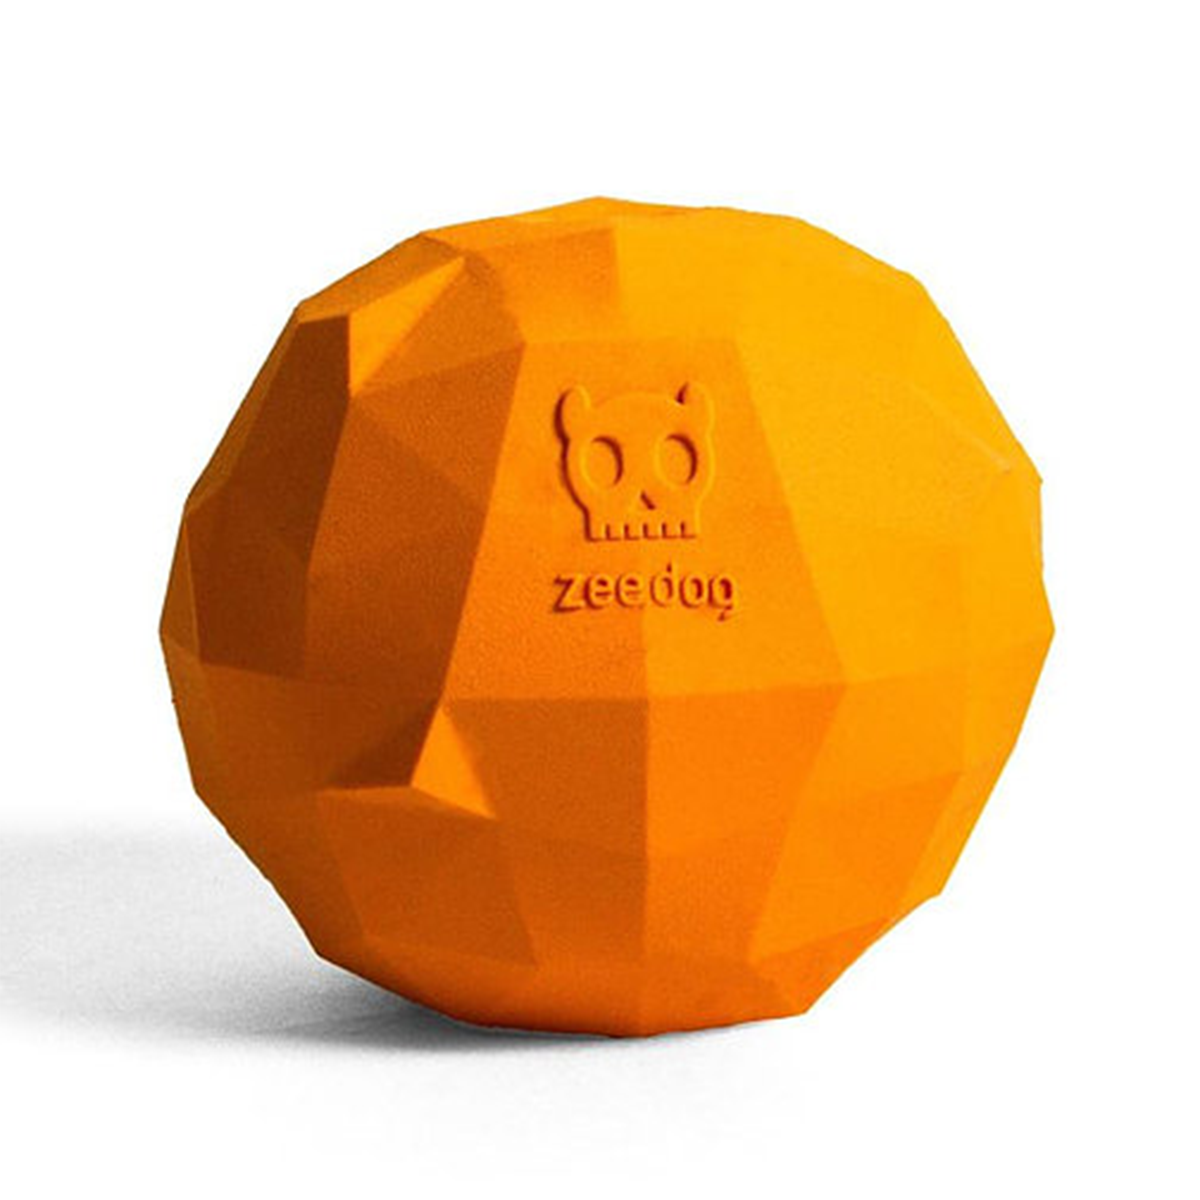 Zee.Dog Super Orange - Treat Dispensing Toy